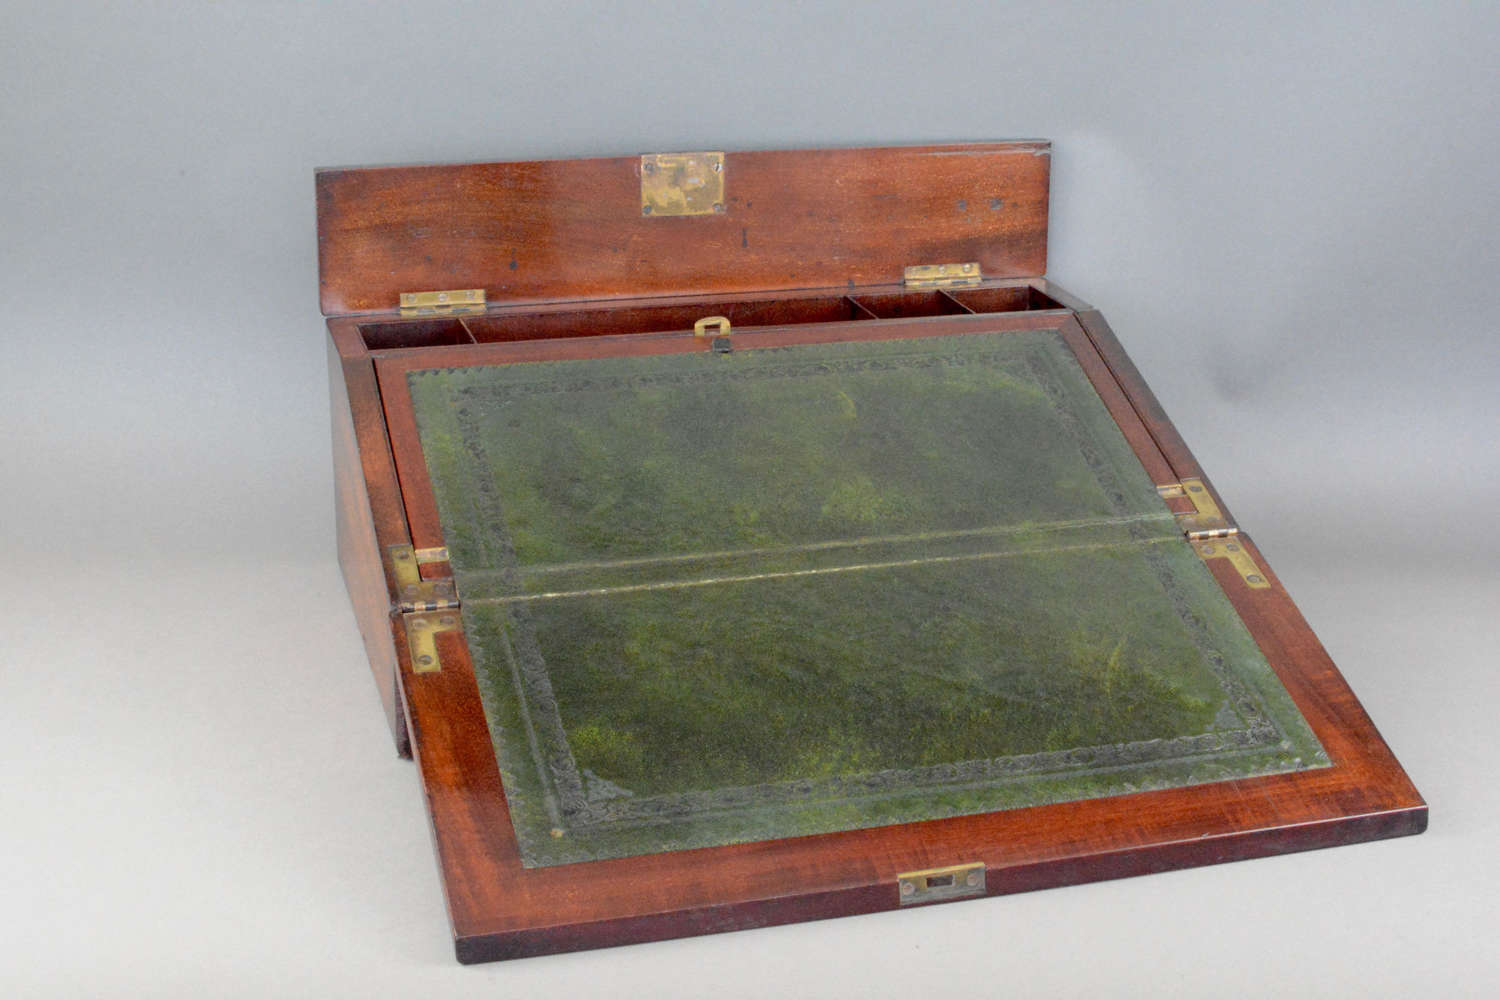 Understated Victorian Gentlemans mahogany writing box